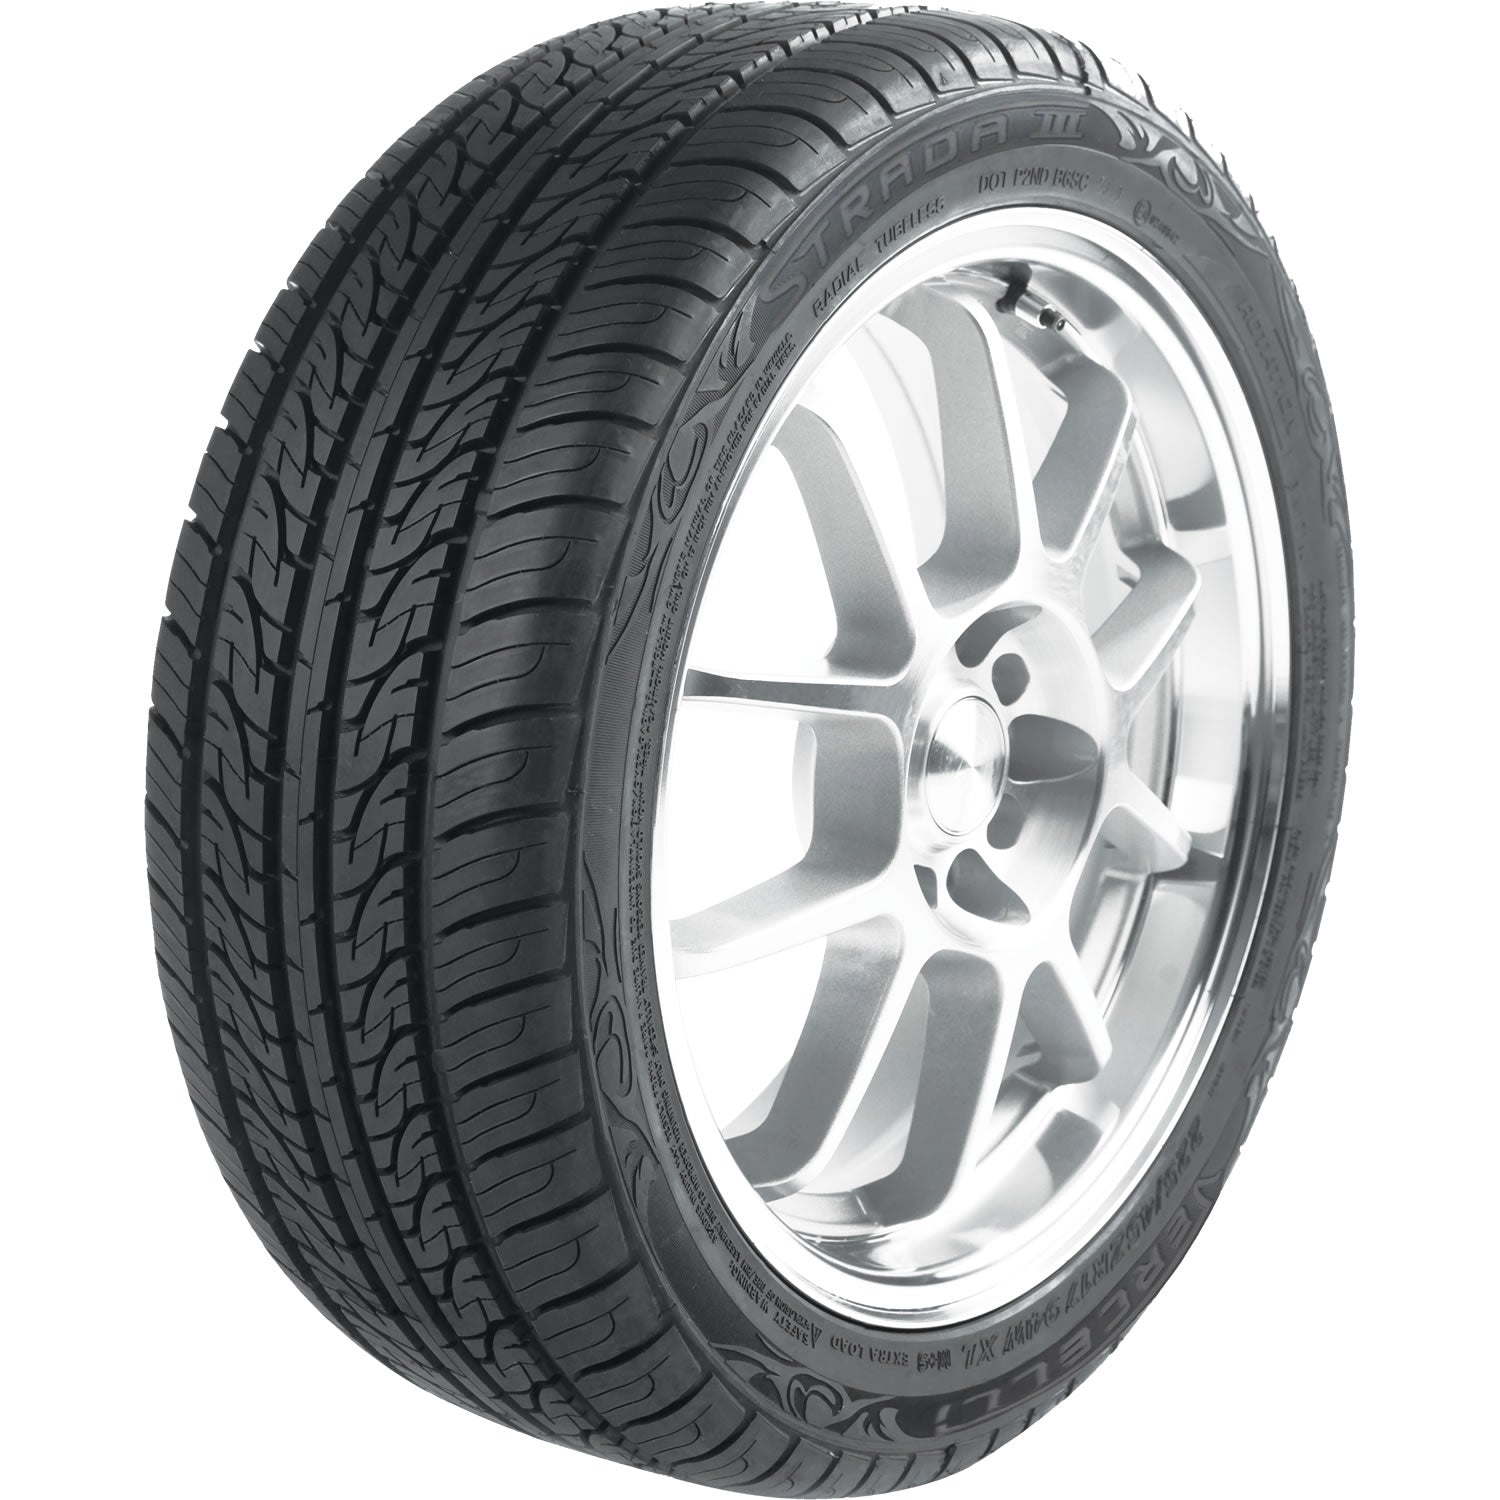 VERCELLI STRADA II 215/55ZR16 (25.3X8.9R 16) Tires